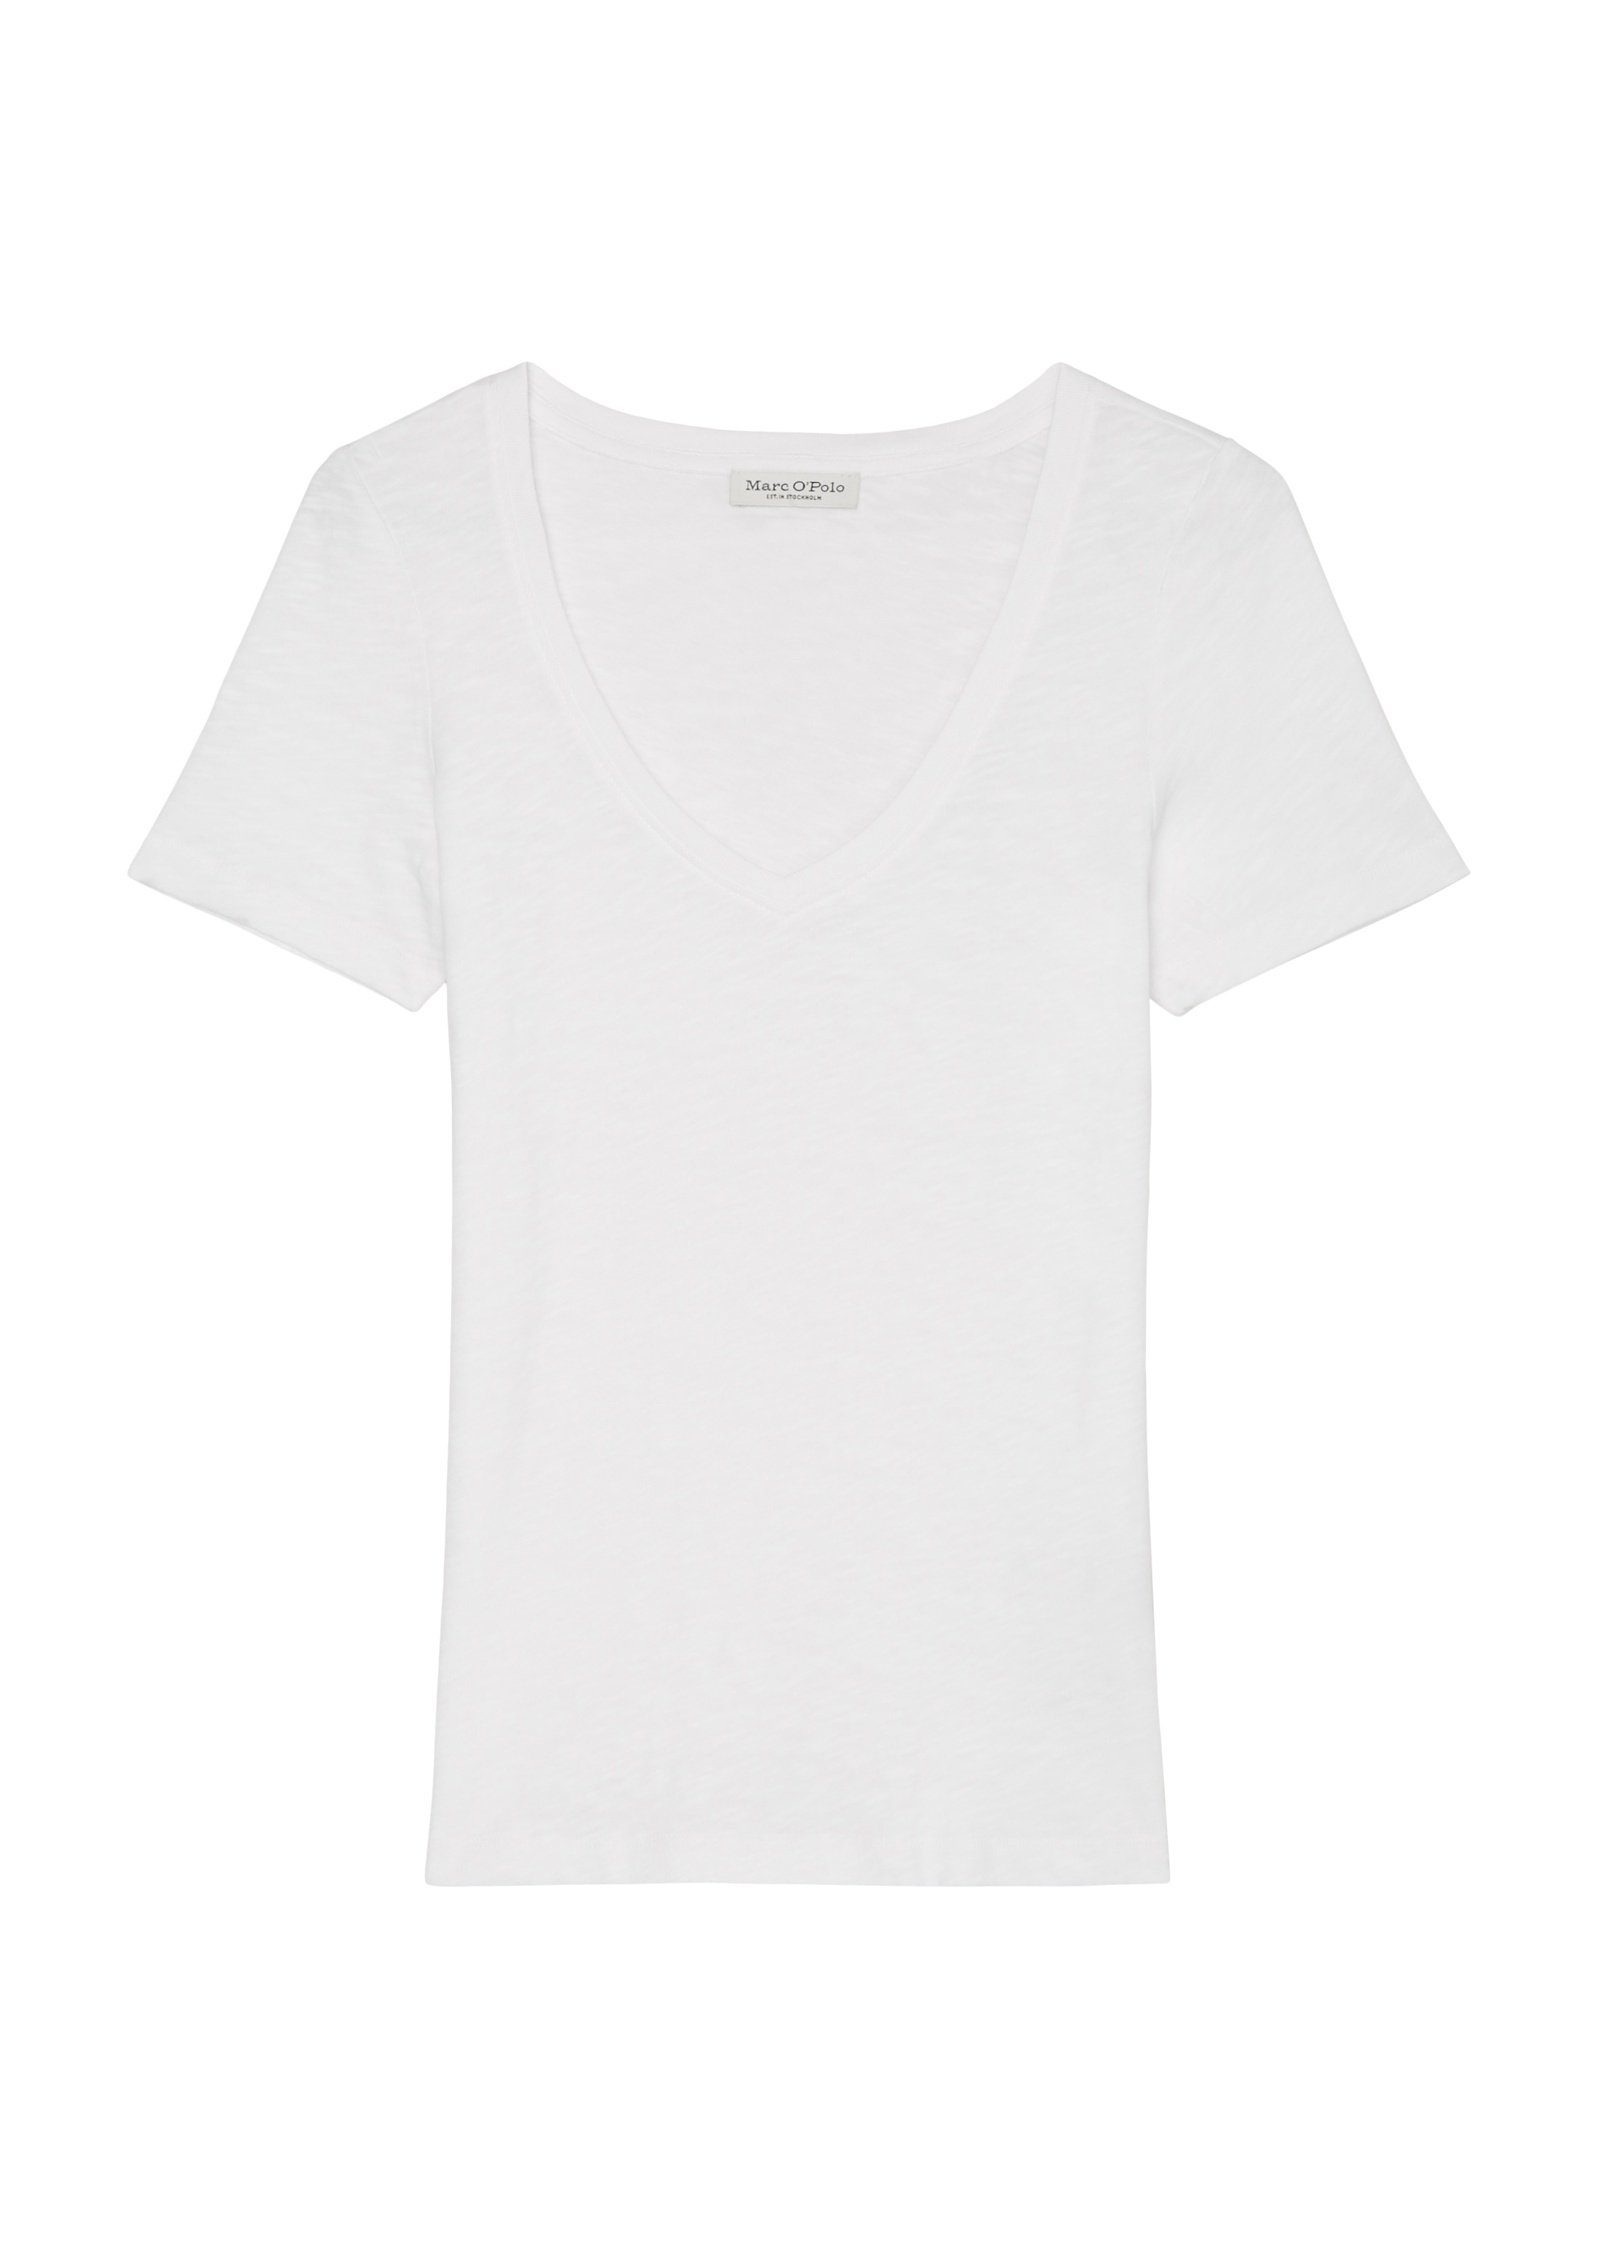 T-Shirt Cotton Slub O'Polo Marc Organic Jersey weiß aus